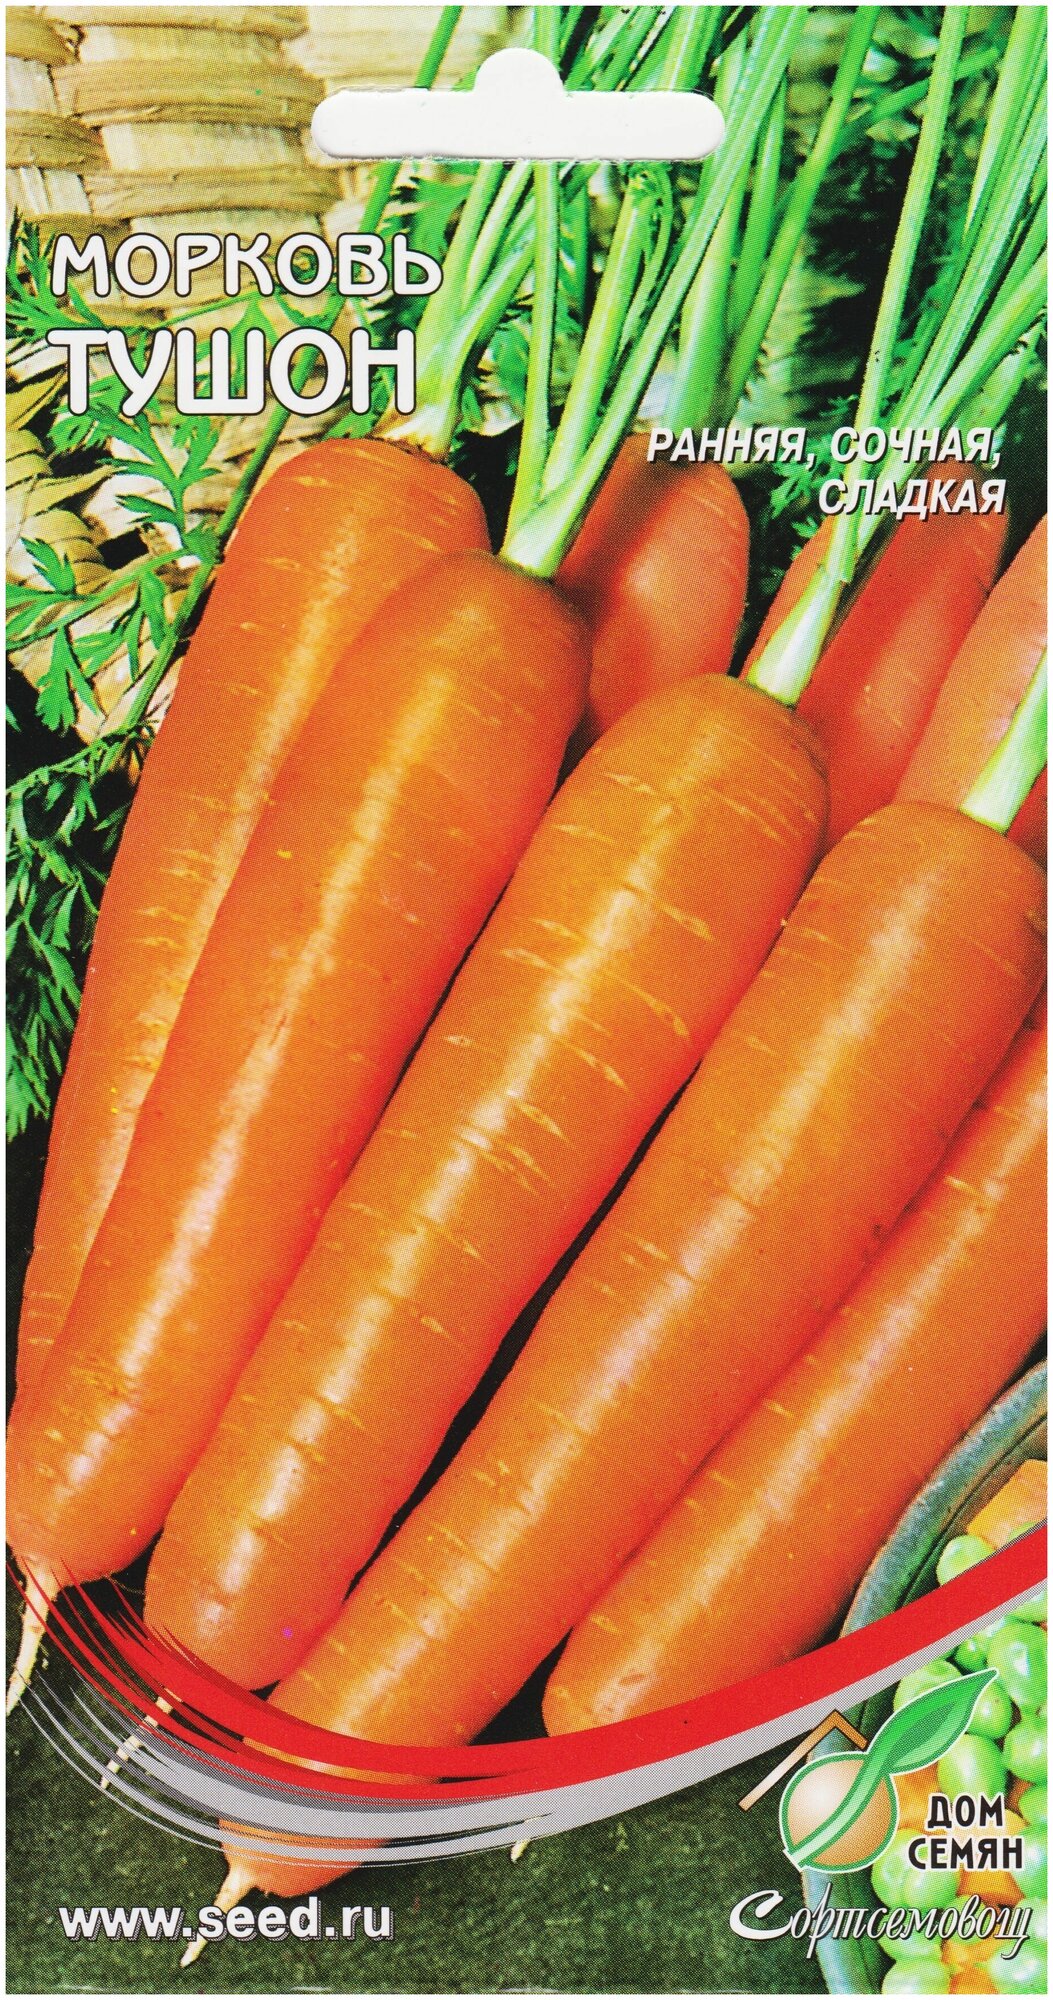 Морковь Тушон 1700 семян